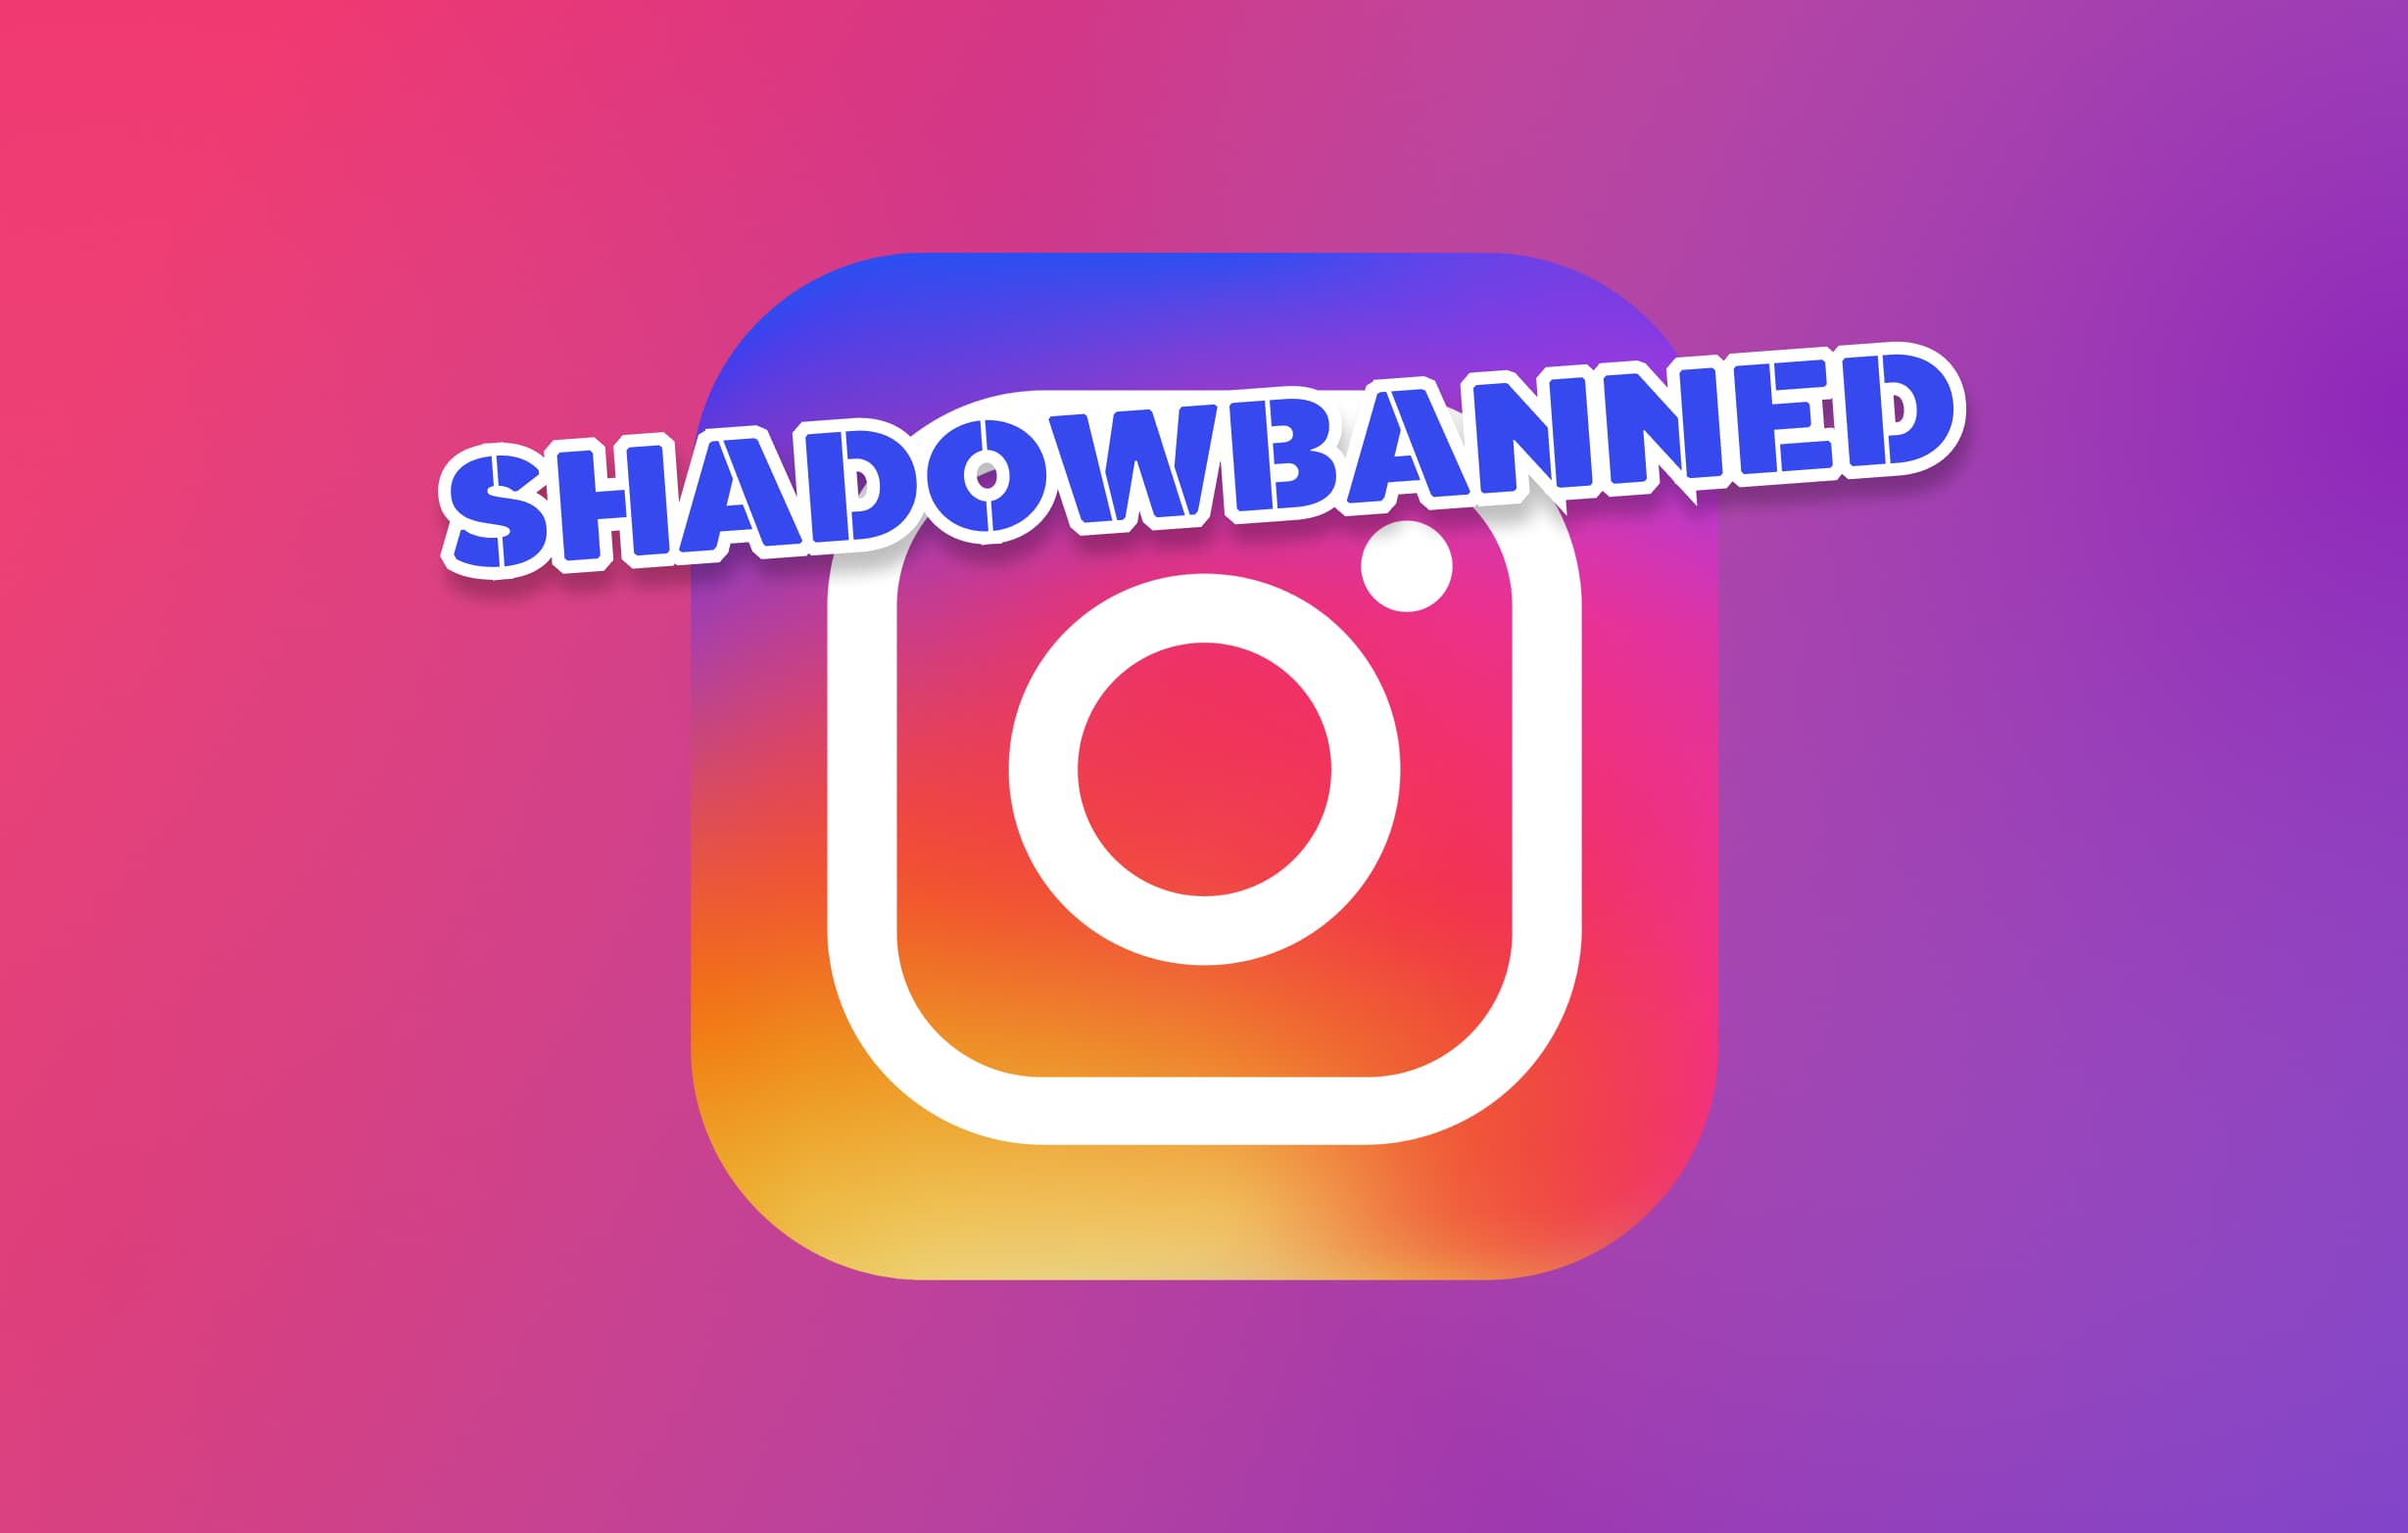 Shadowbanned instagram logo.